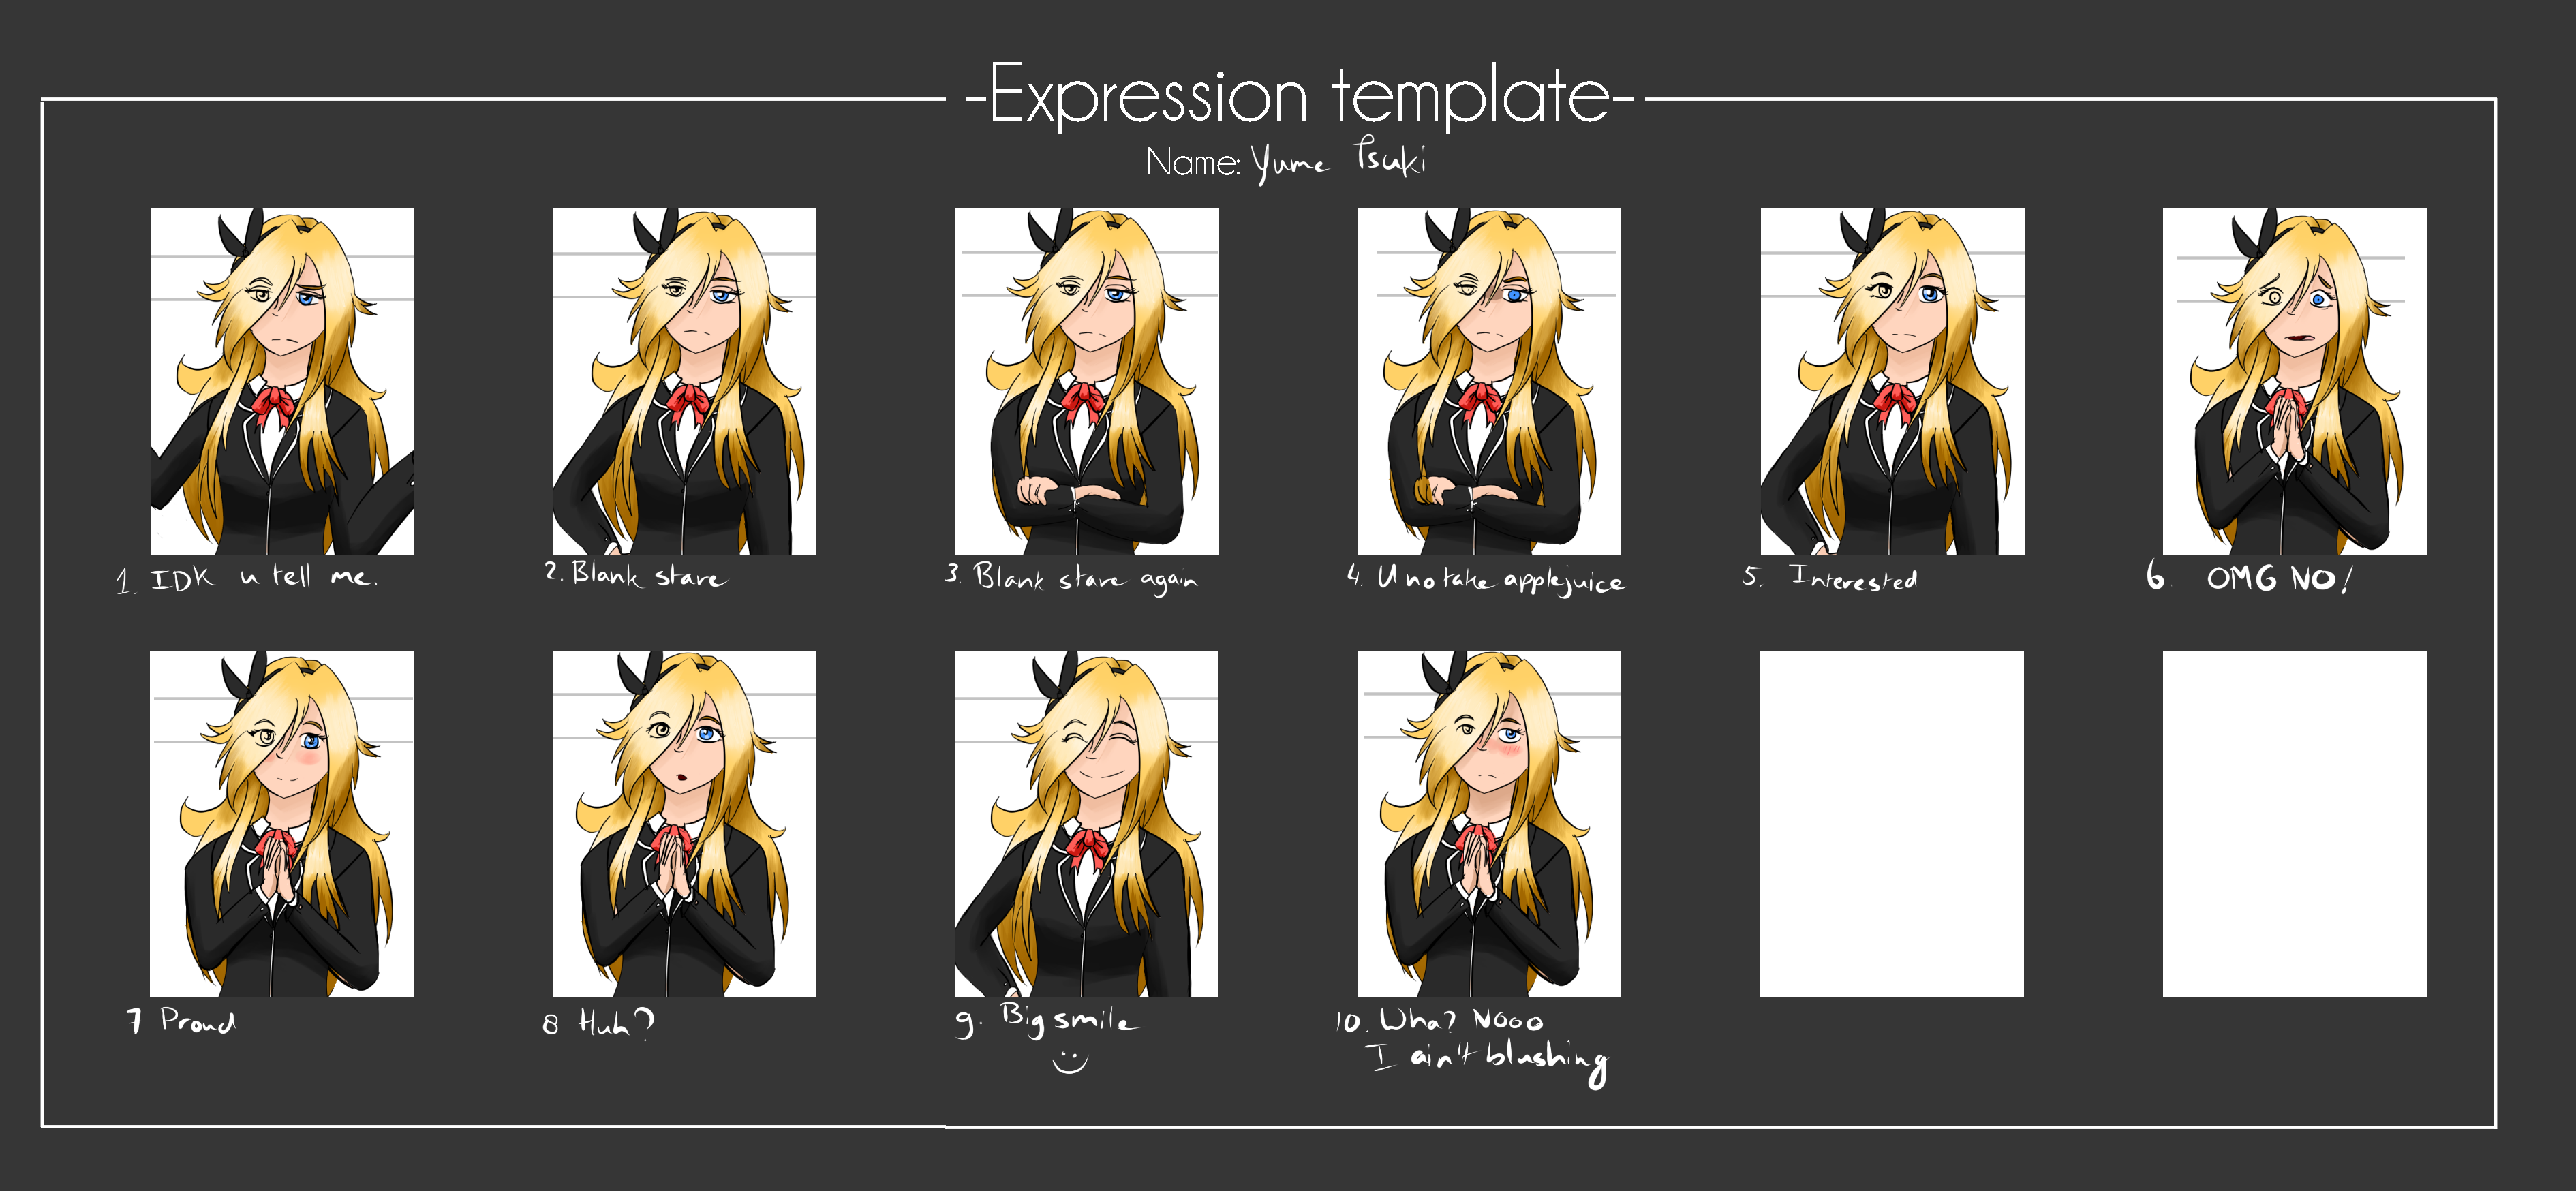 vn_expression_template__yume__school_uniform__by_froslassmaniac-d94tclb.png